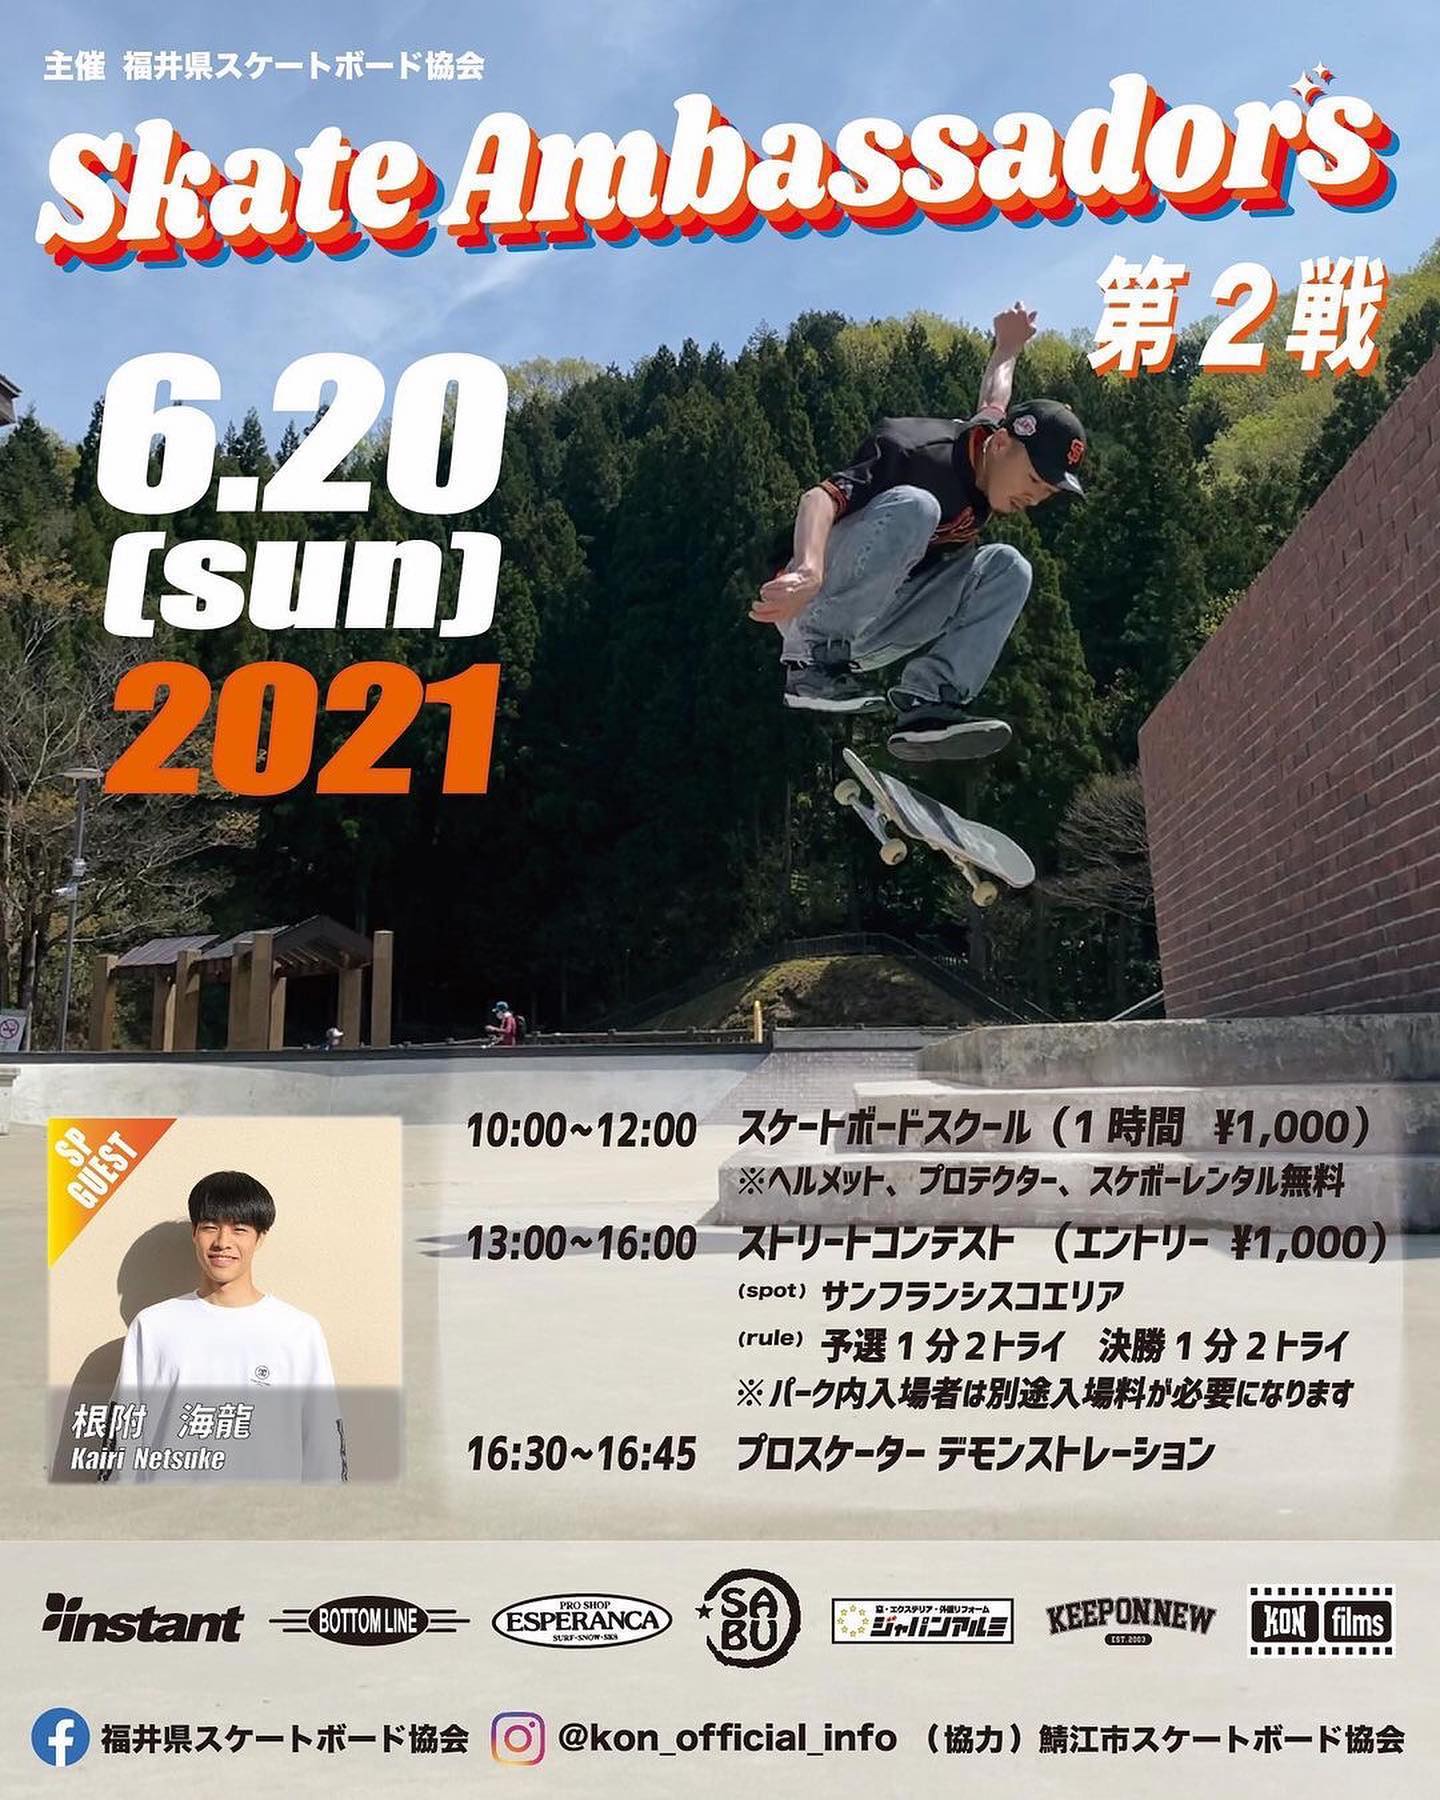 6/20 SkateAmbassadors #第2戦 #fukui #skateboarding #kon #streetcontest #sanfrancisco #proskaterdemo #kairinetsuke